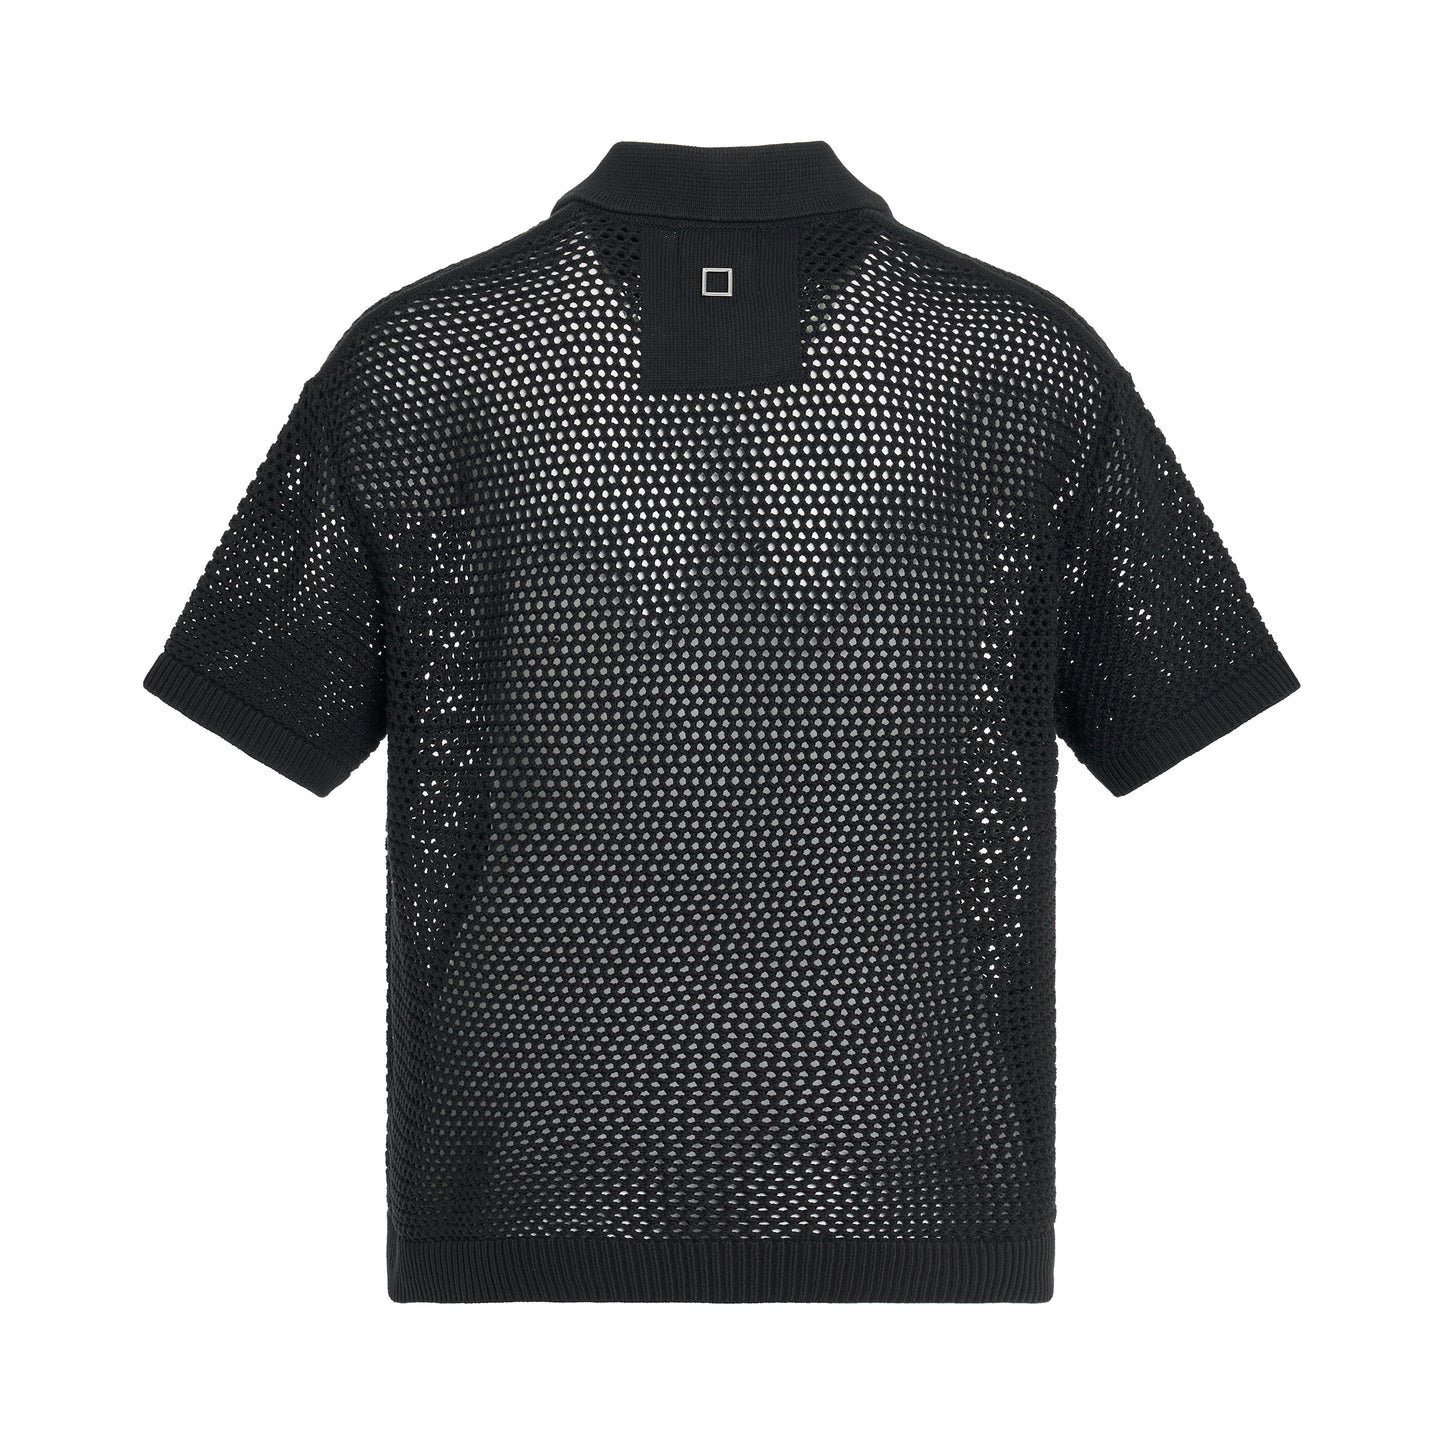 Quarter Zip Knitted Shirt in Black